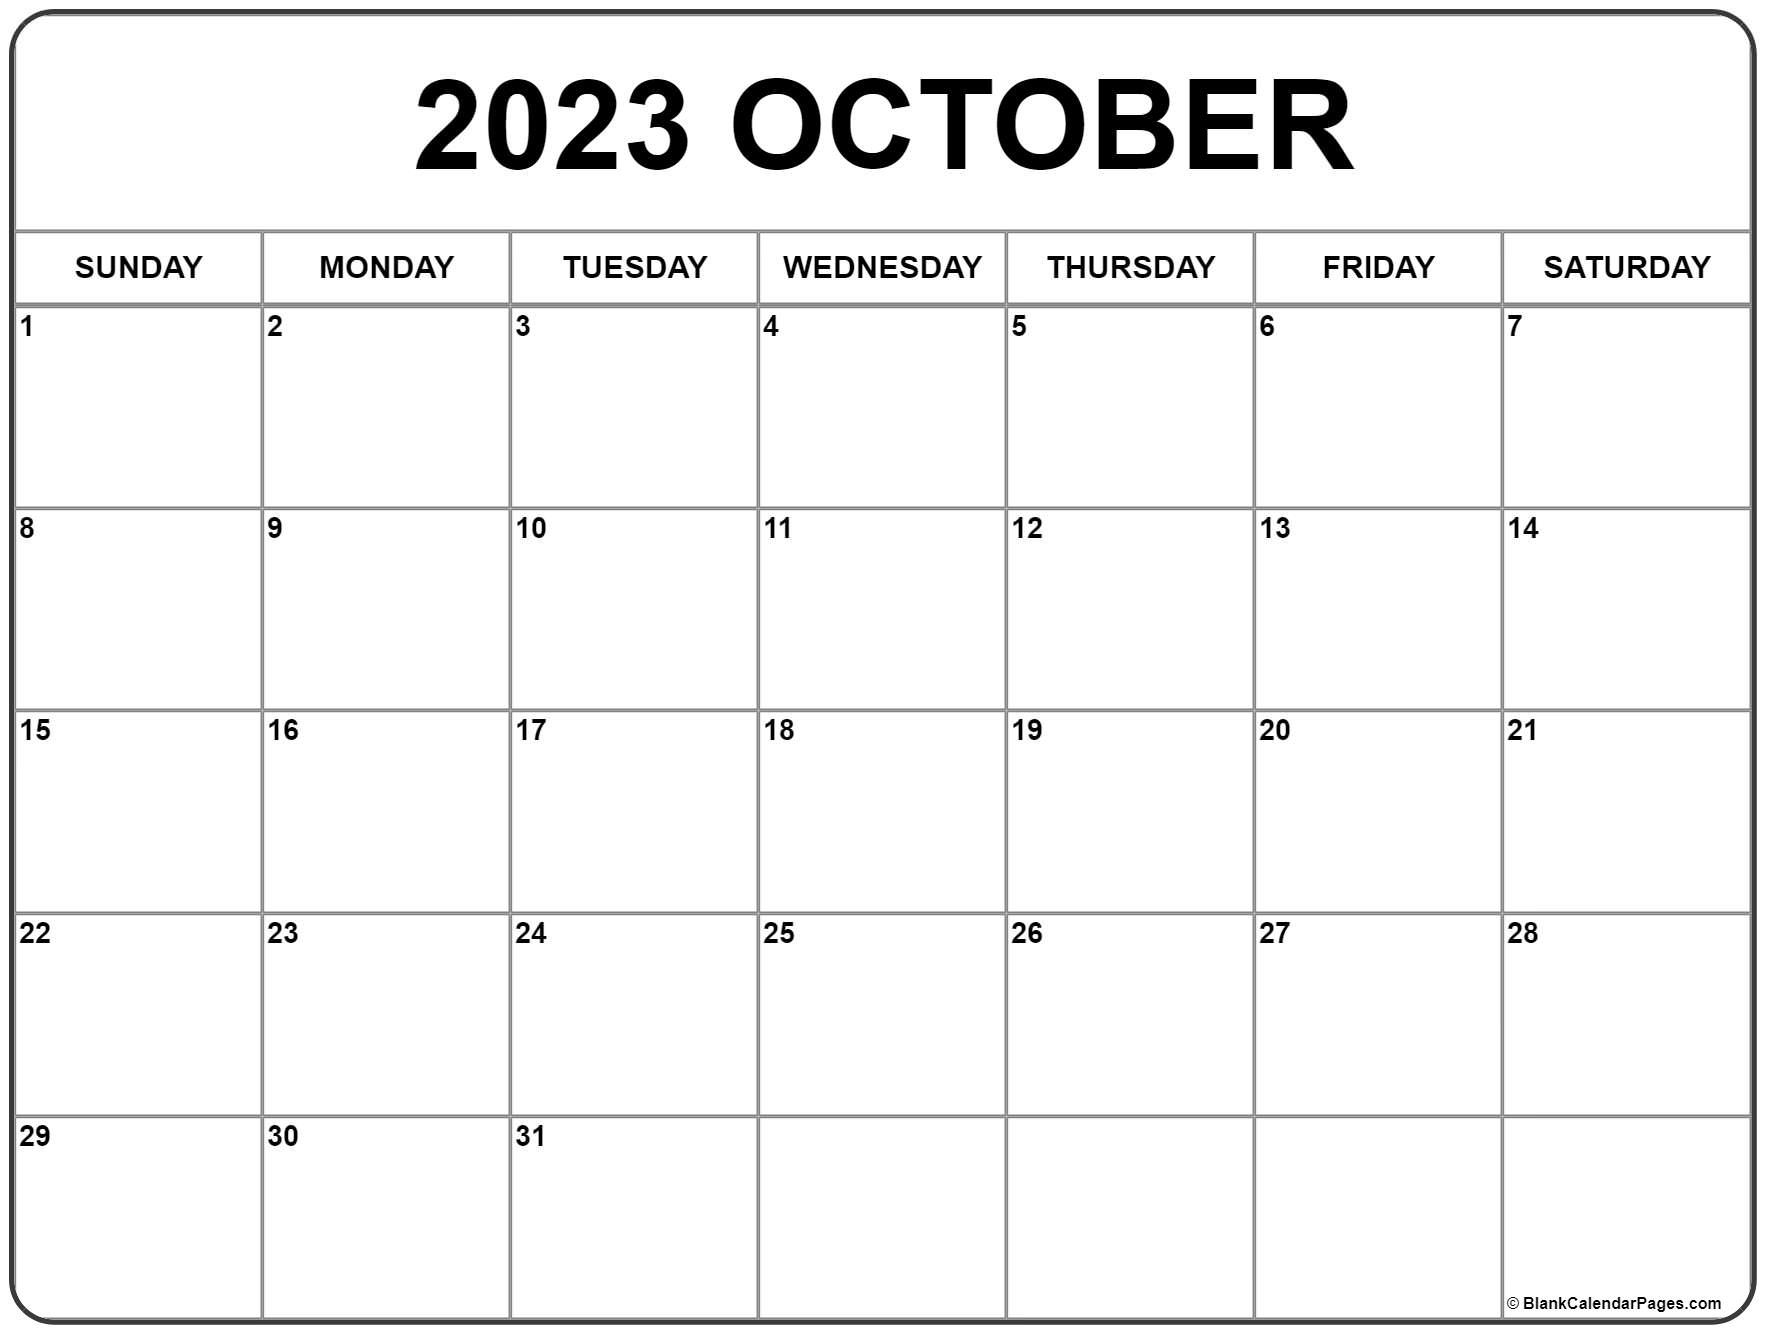 Calendar 2023 Printable Free Monthly October Get Calendar 2023 Update